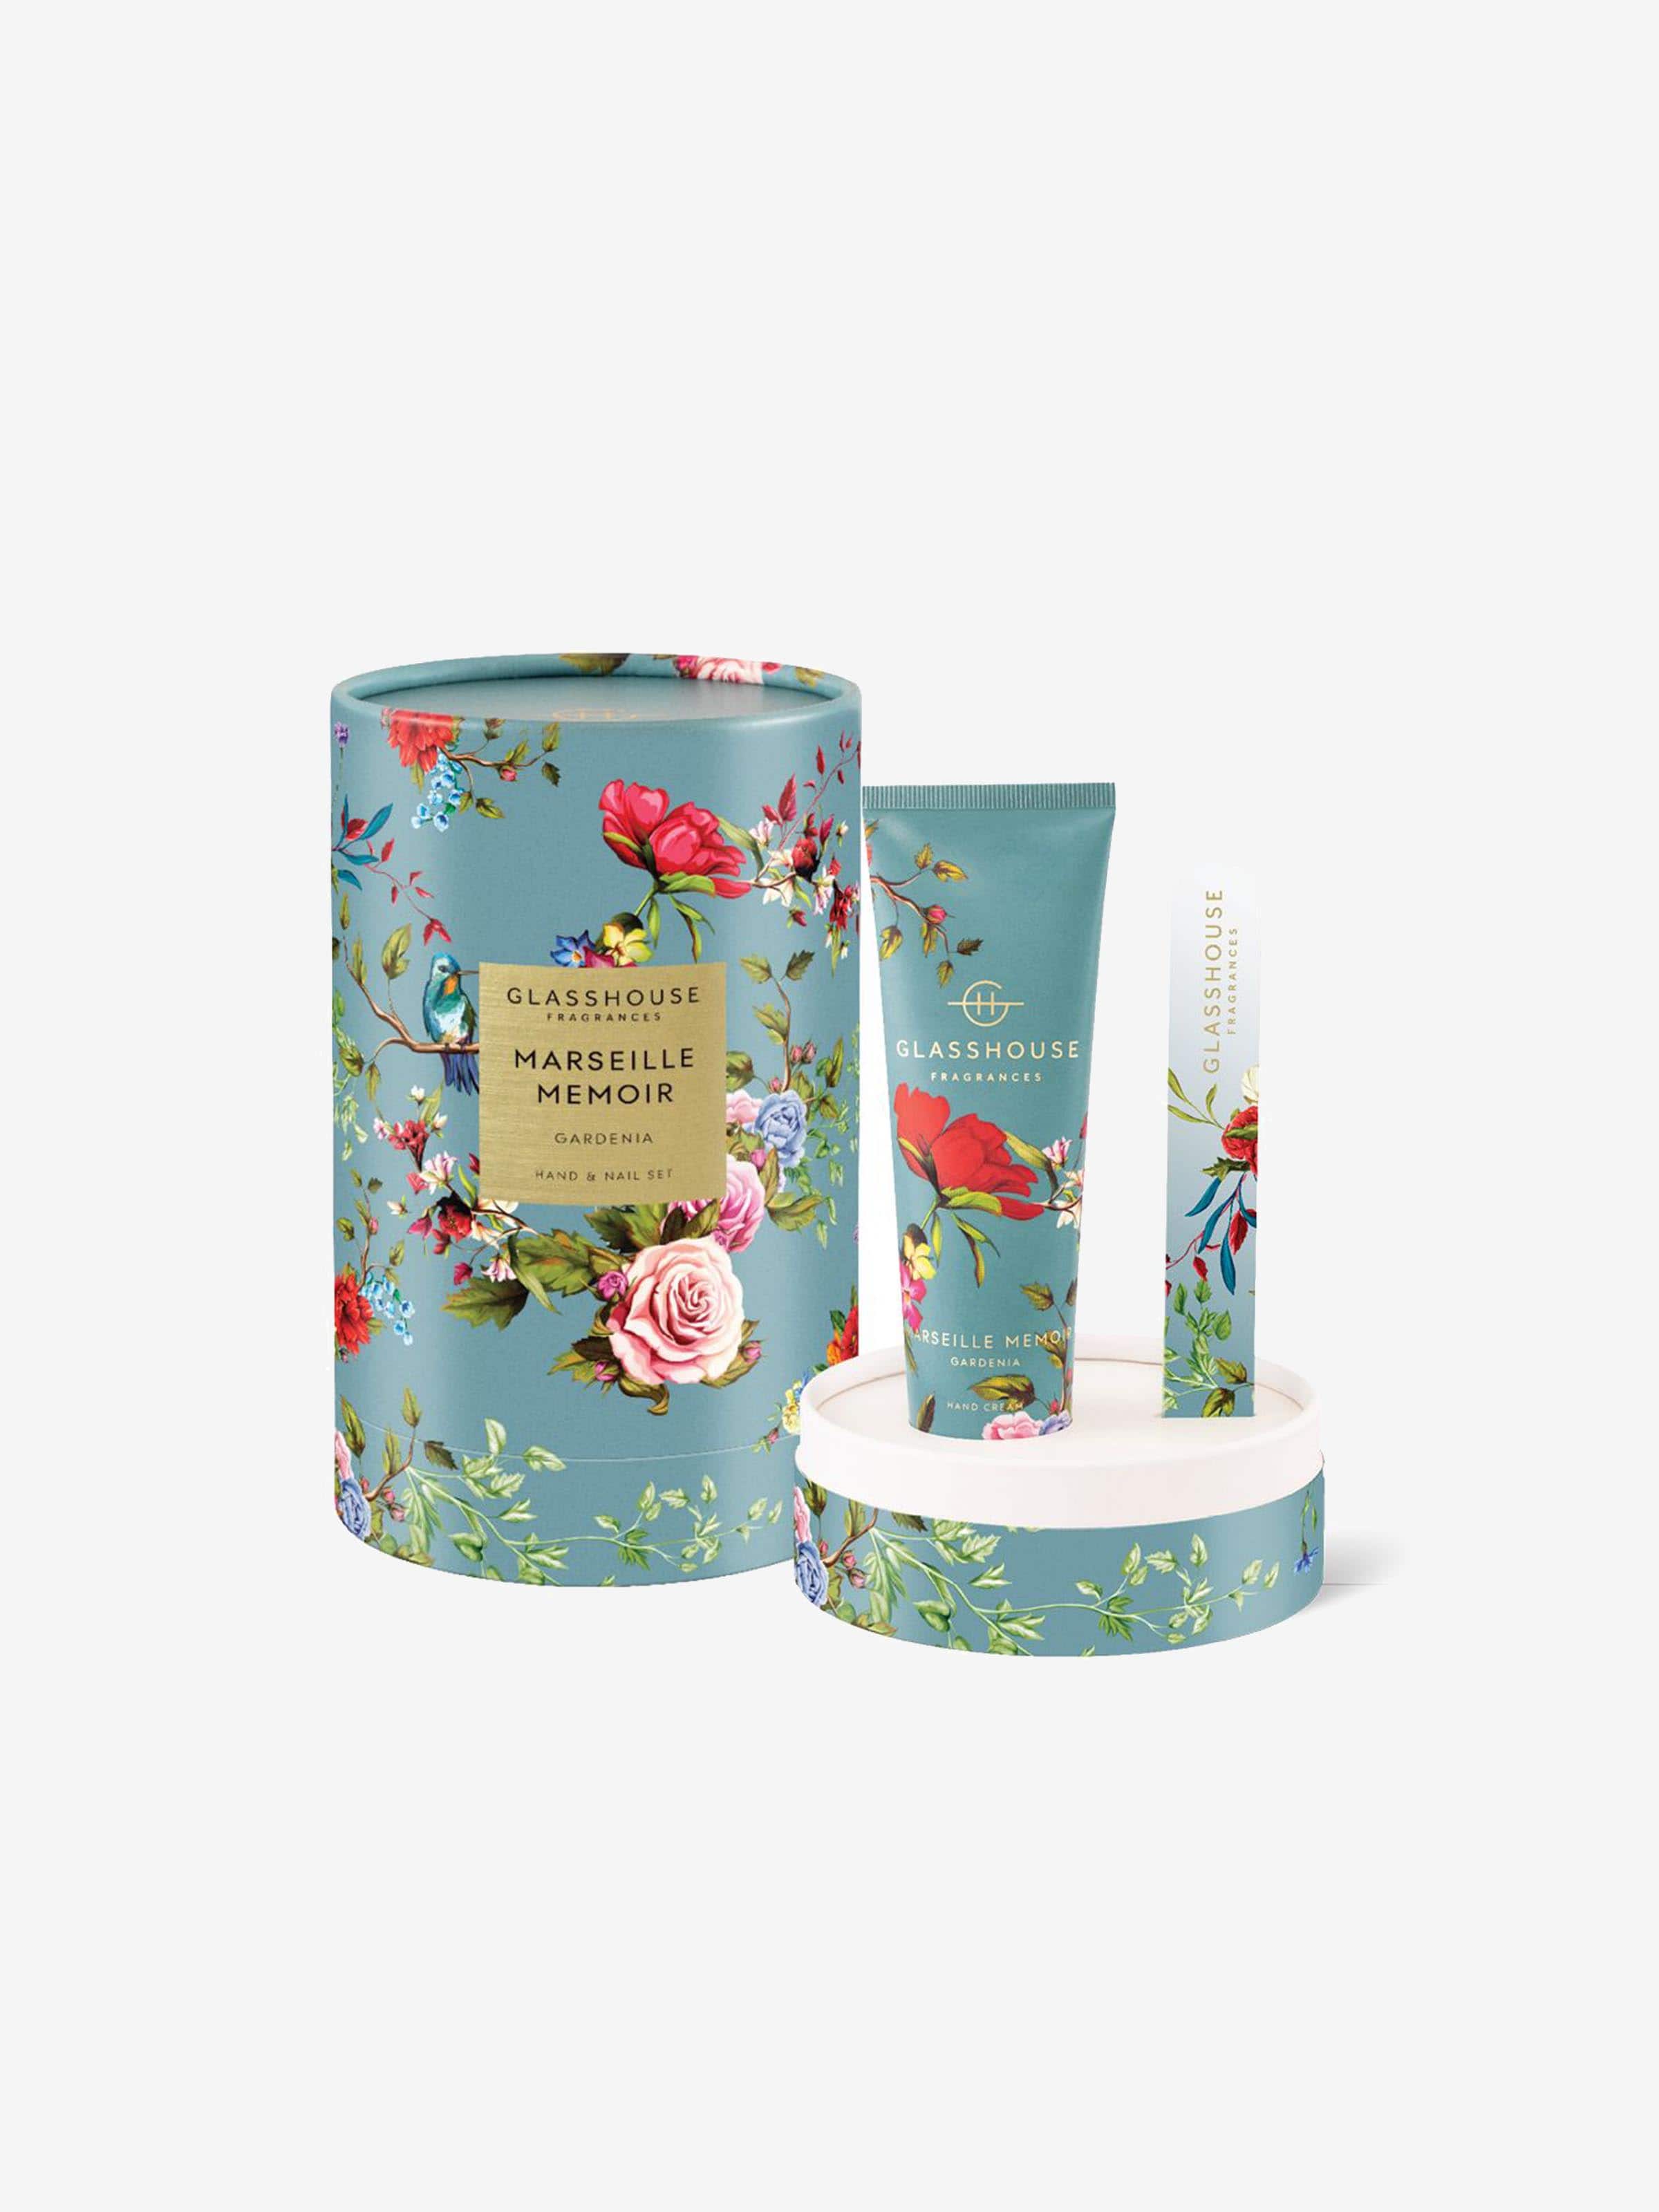 Glasshouse Fragrances Limited Edition Hand & Nail Gift Set